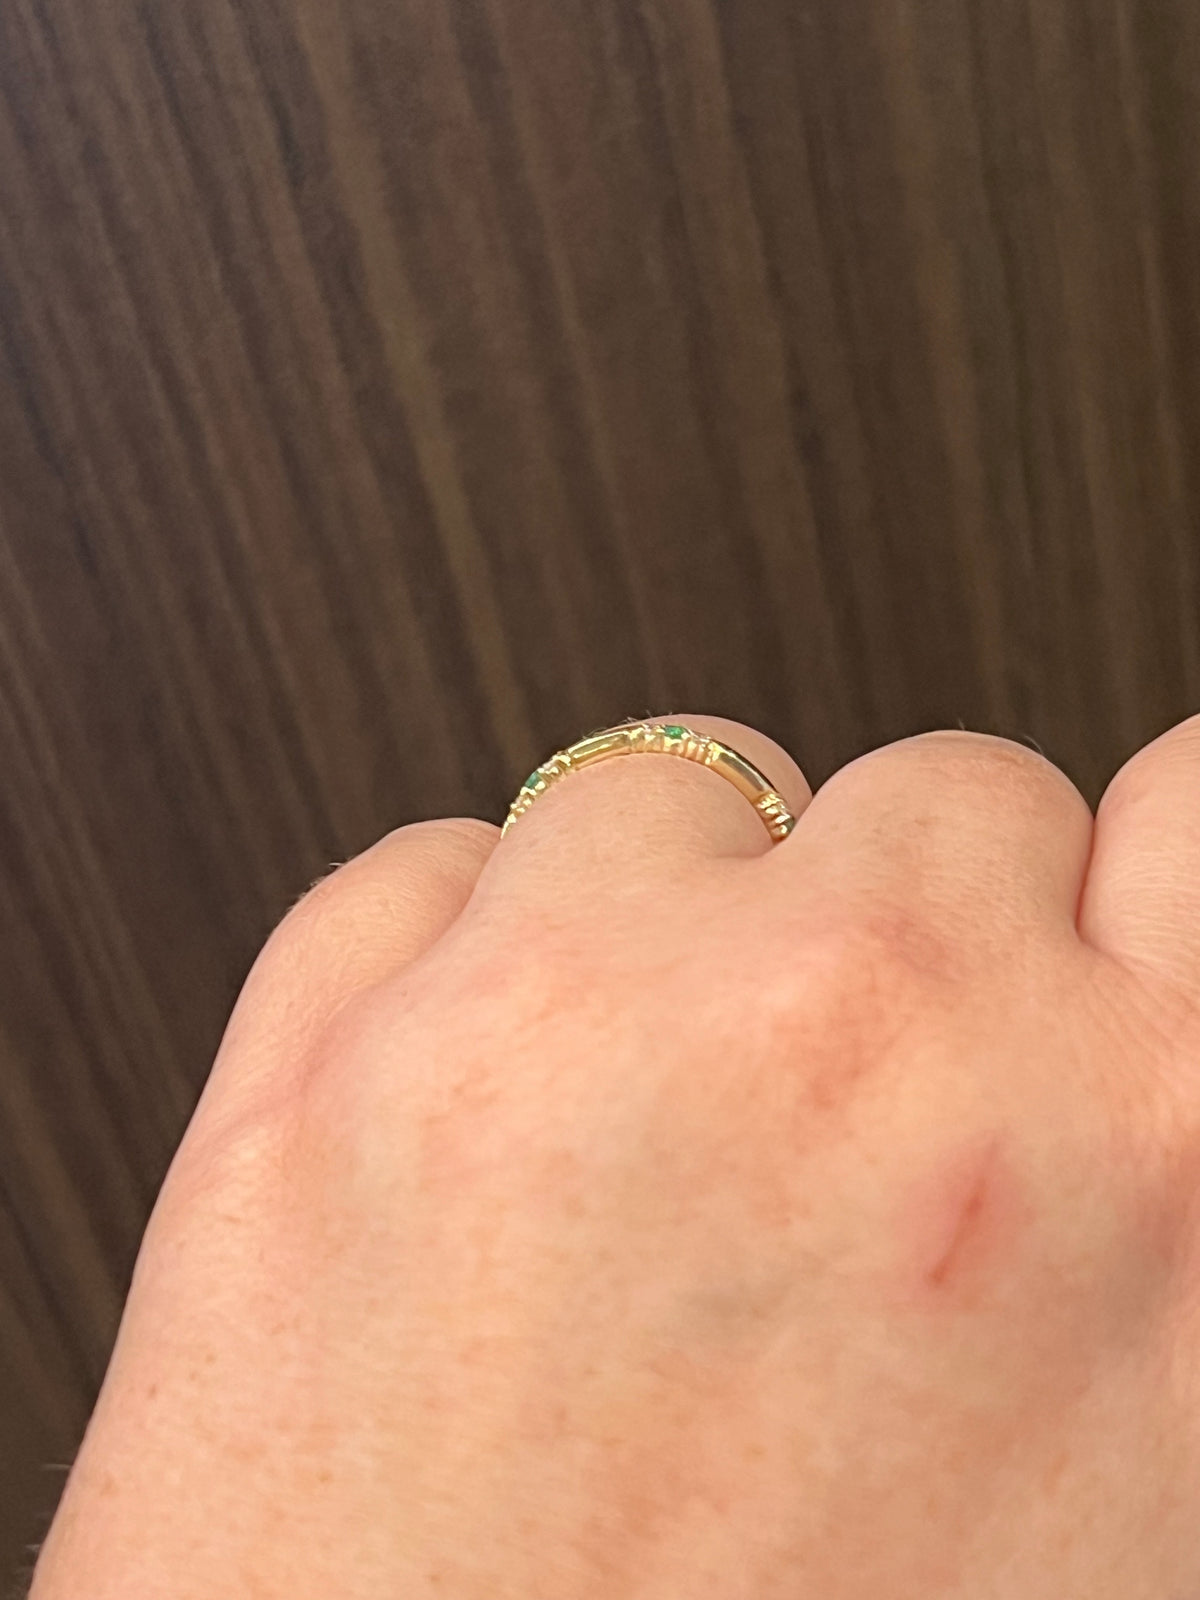 10K Yellow Gold Genuine Emerald &amp; 0.13cttw Diamond Ring / Band, size 6.5